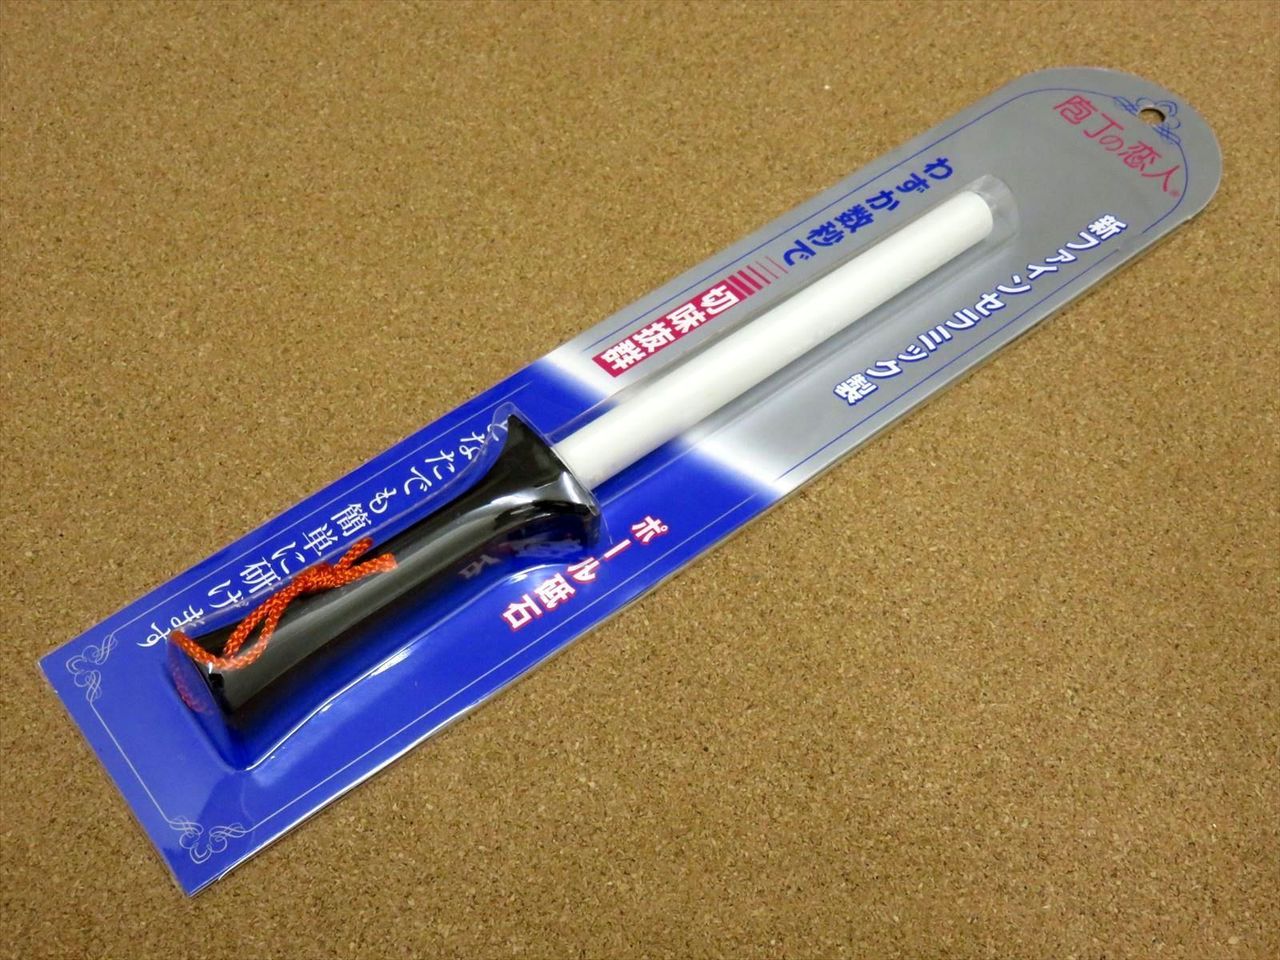 Japanese Sharpening Stone Whetstone Knife Sharpening Angle Guide Japanese  Kitchen Tool Made in Japan Kitchen Tool Made in Japan 